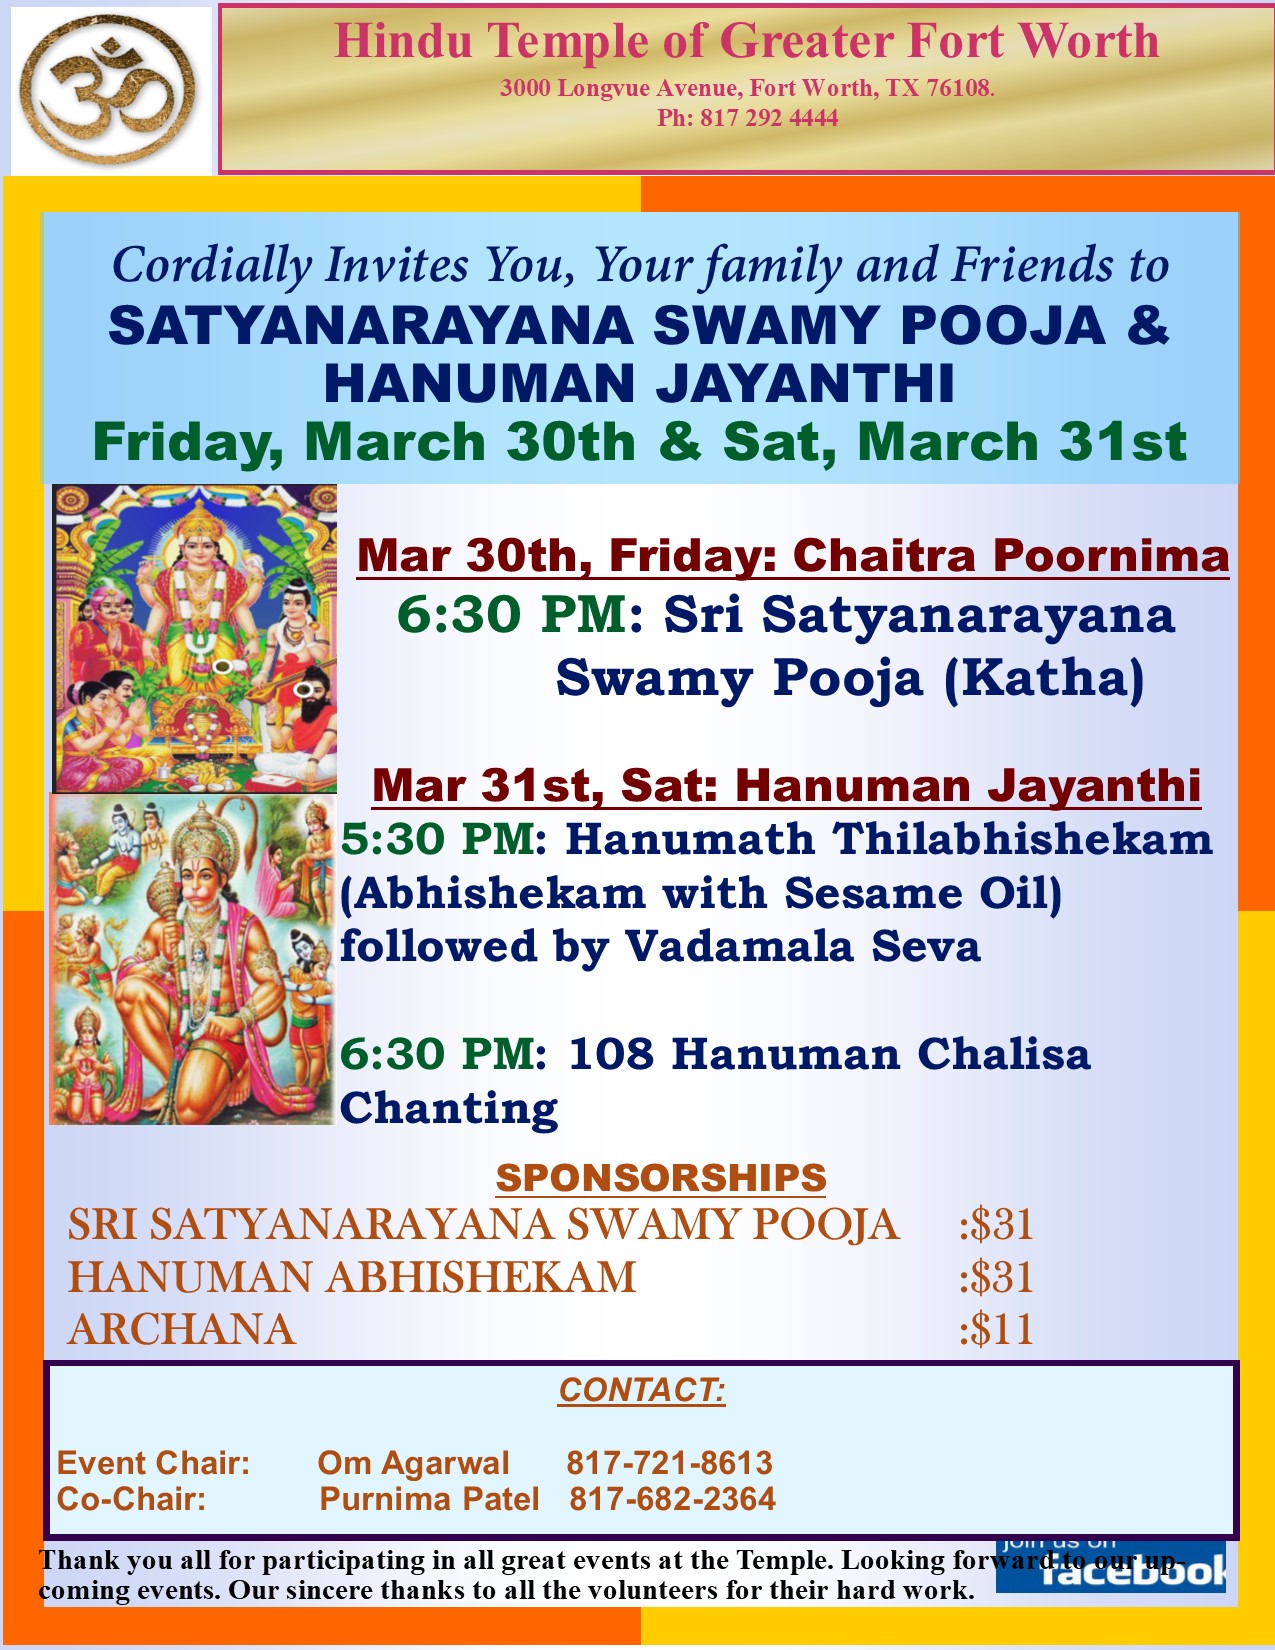 Satyanarayana Puja and Hanuman Jayanthi